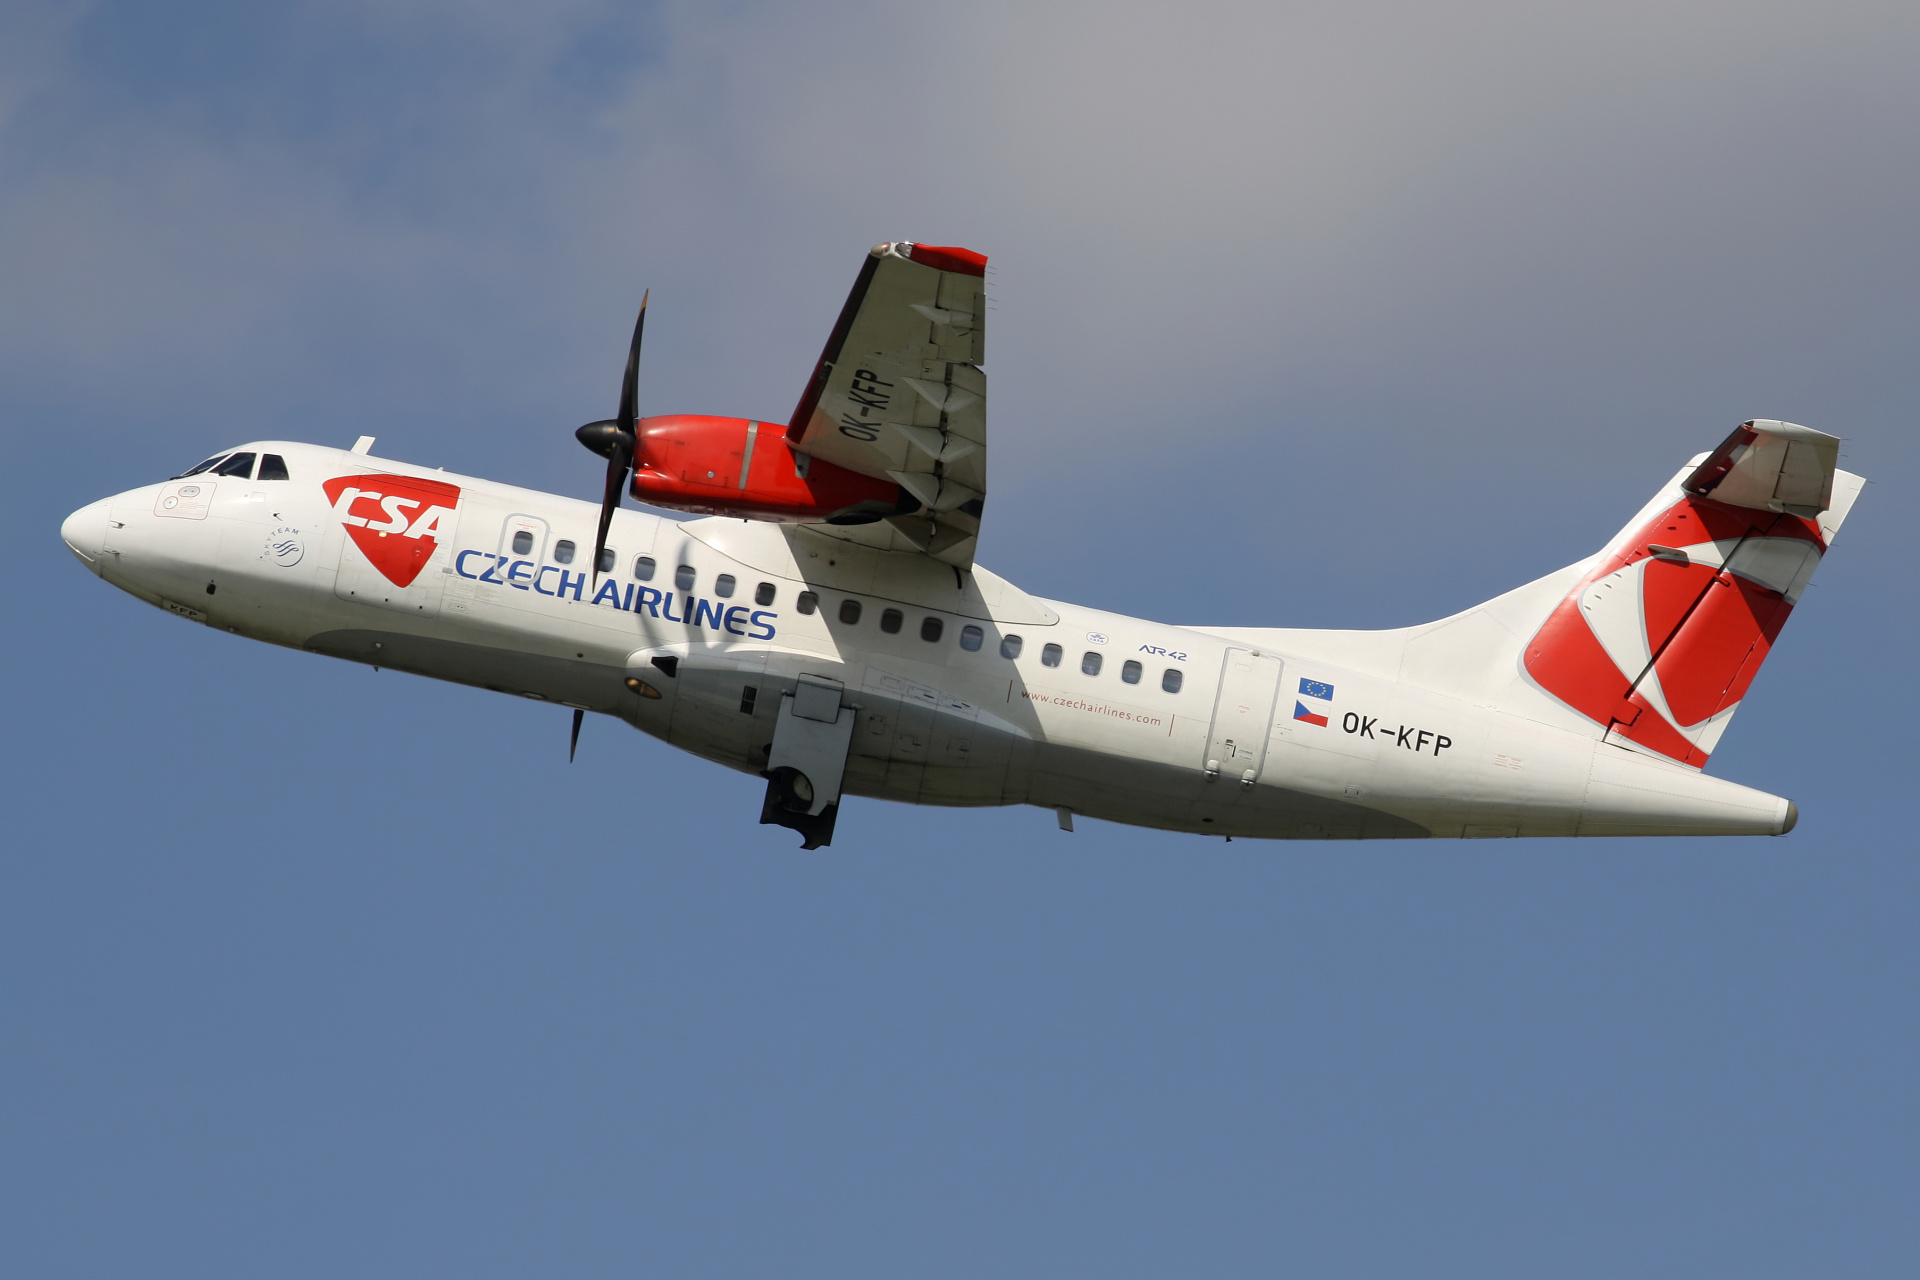 OK-KFP (Aircraft » EPWA Spotting » ATR 42 » CSA Czech Airlines)